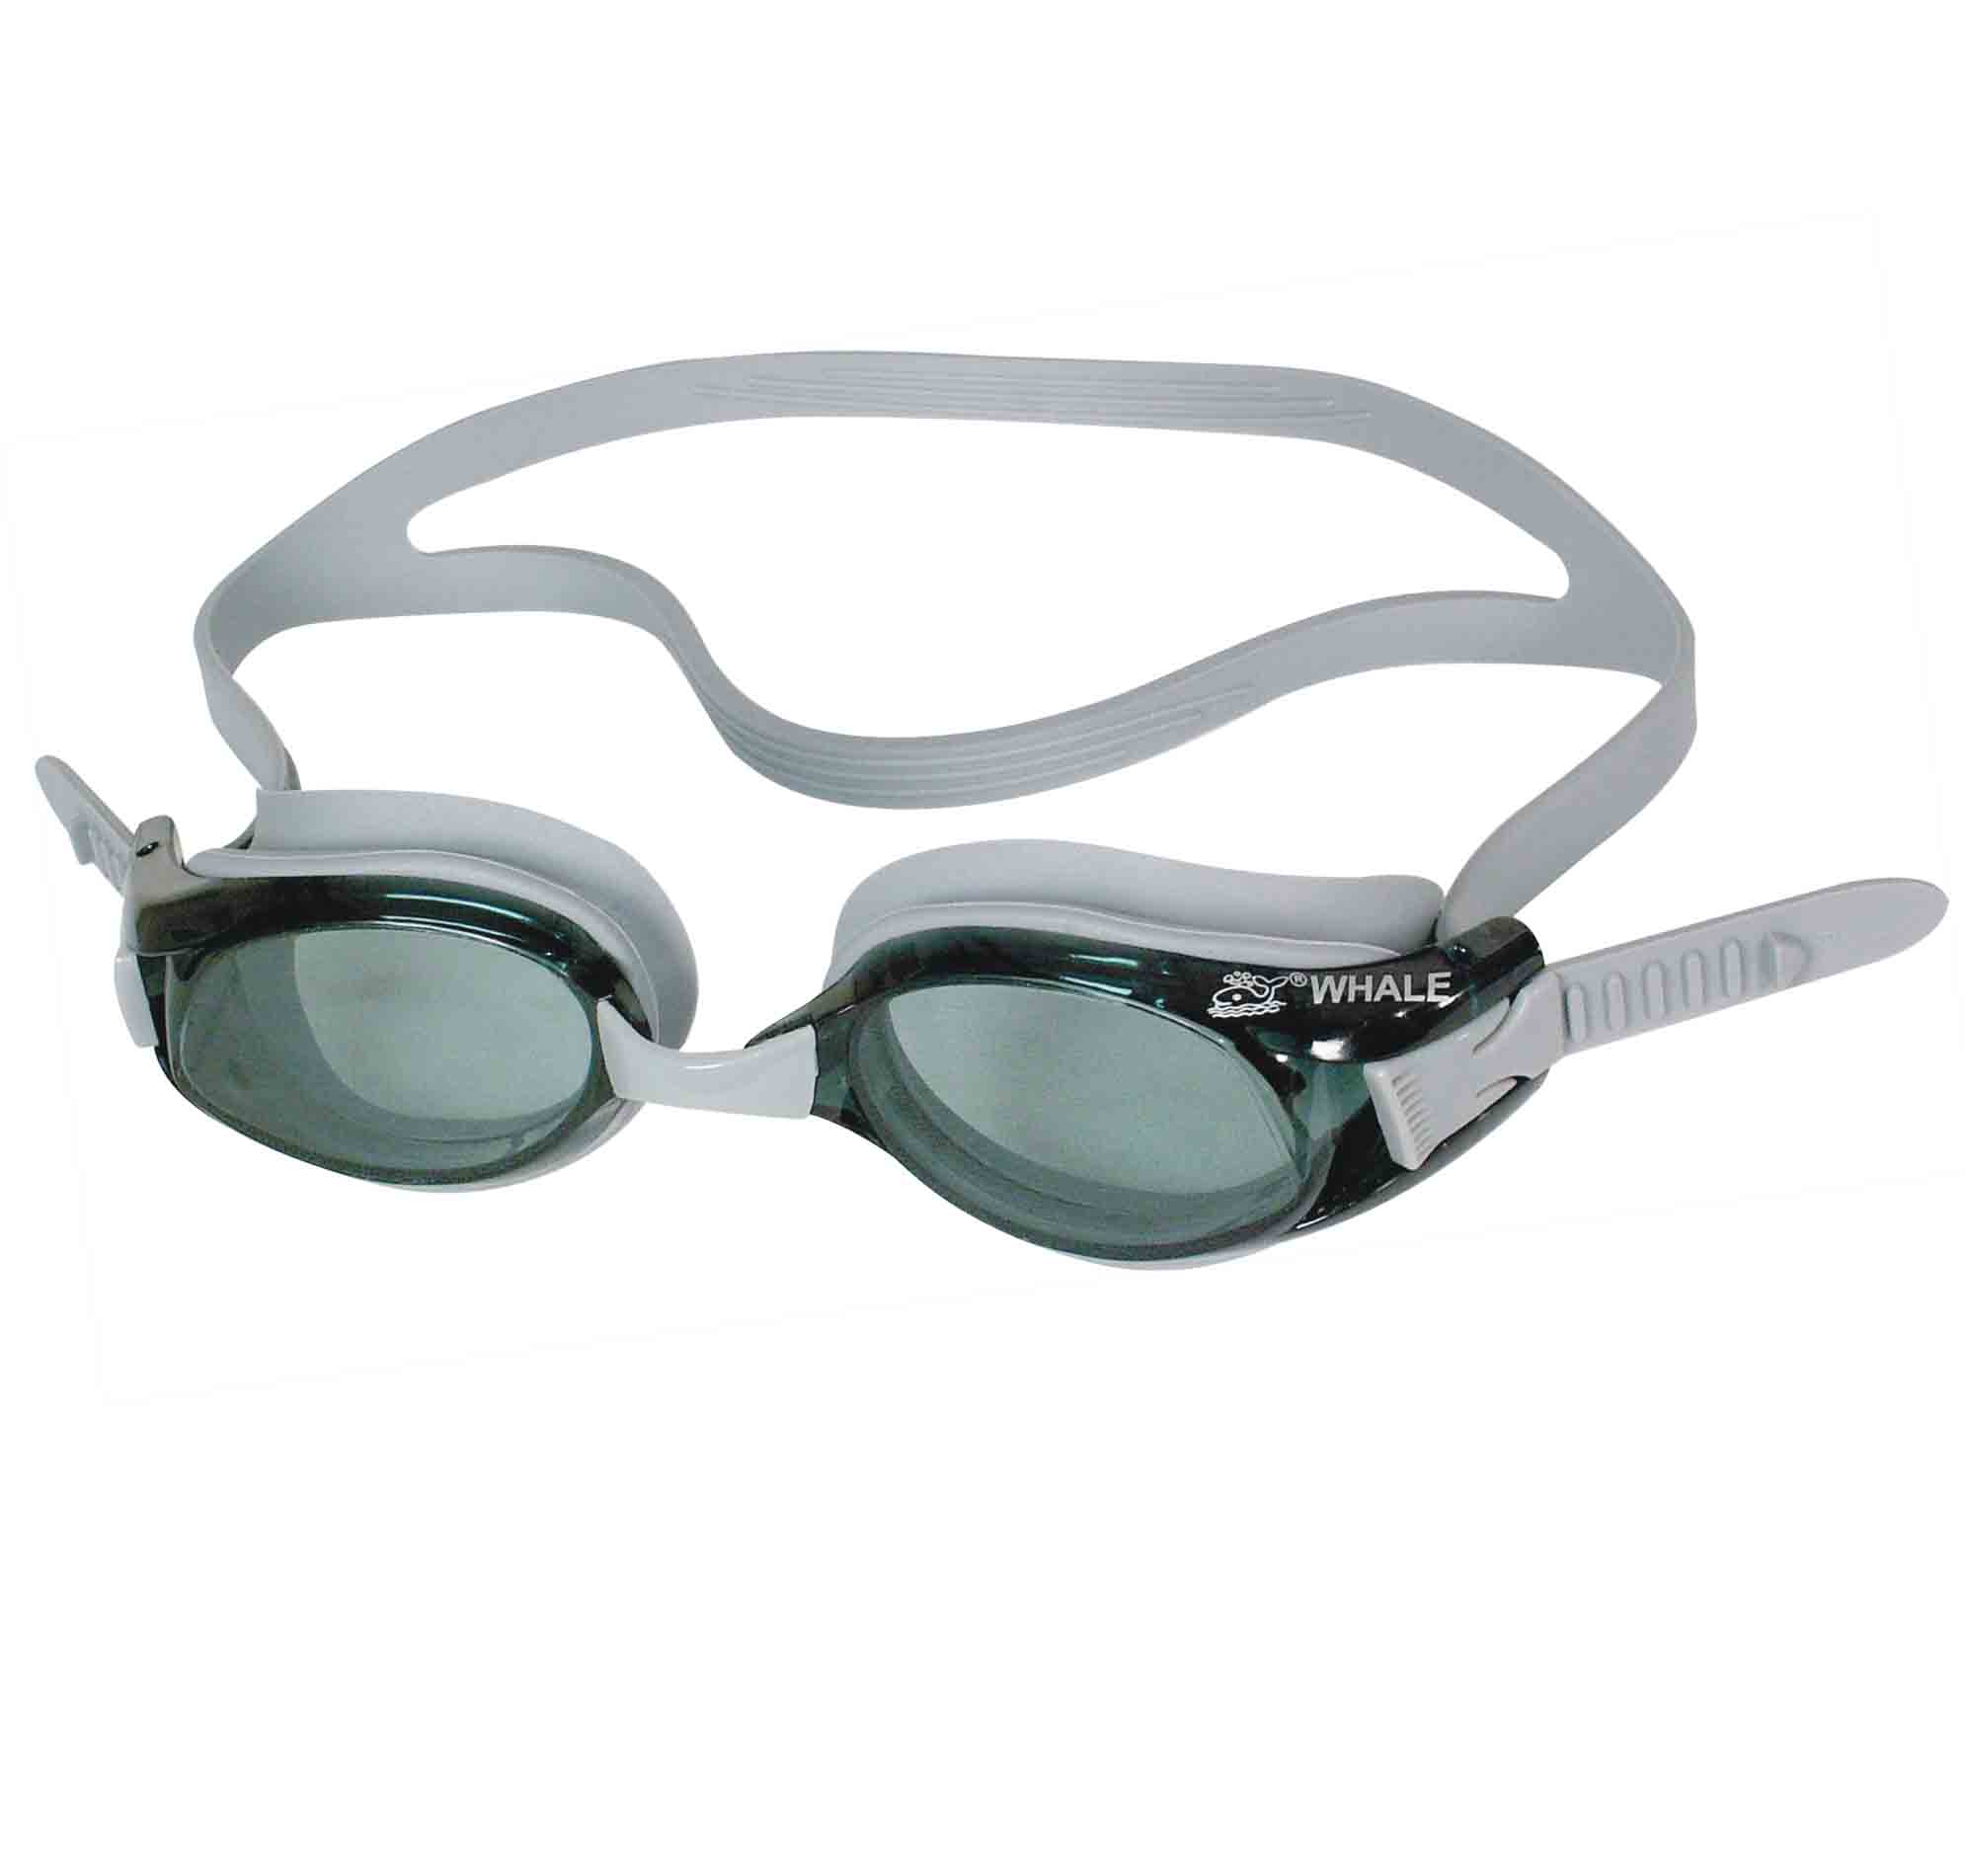  Swim Goggles, Caps And Other Accessories (Плавать очки, шапки и другие аксессуары)